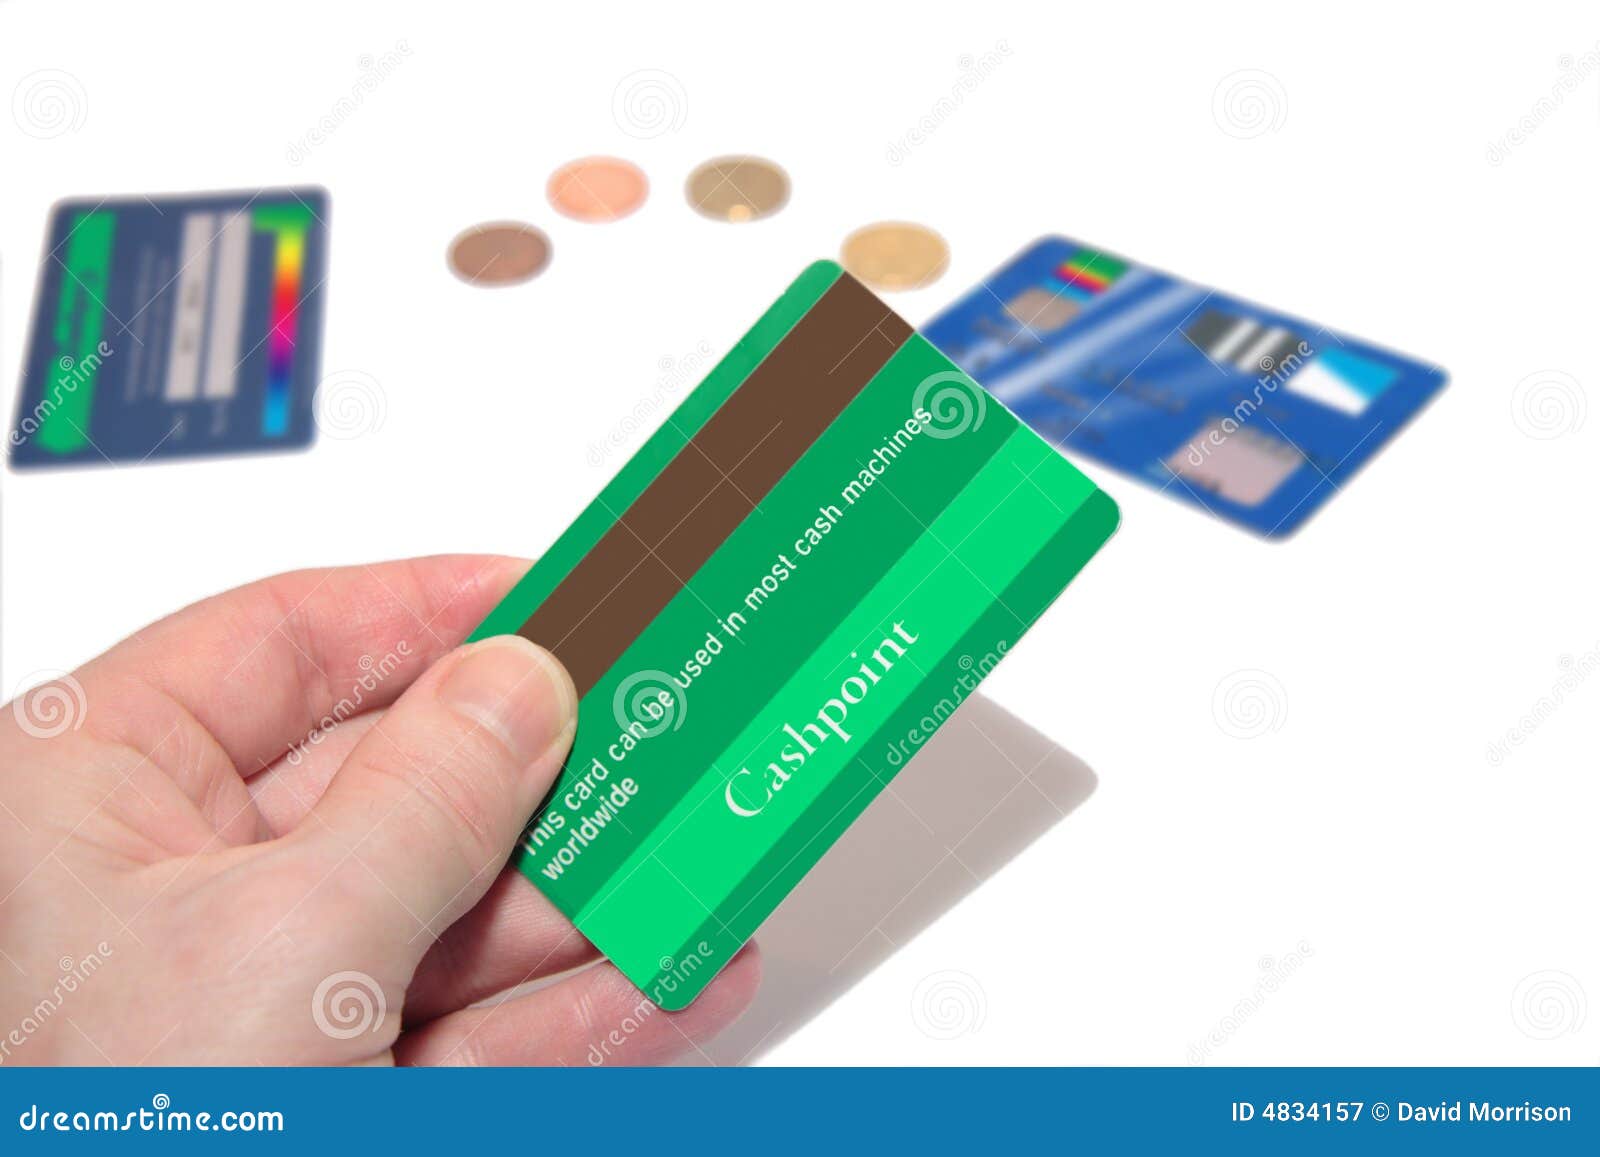 fake-green-credit-card-4-royalty-free-stock-photography-image-4834157